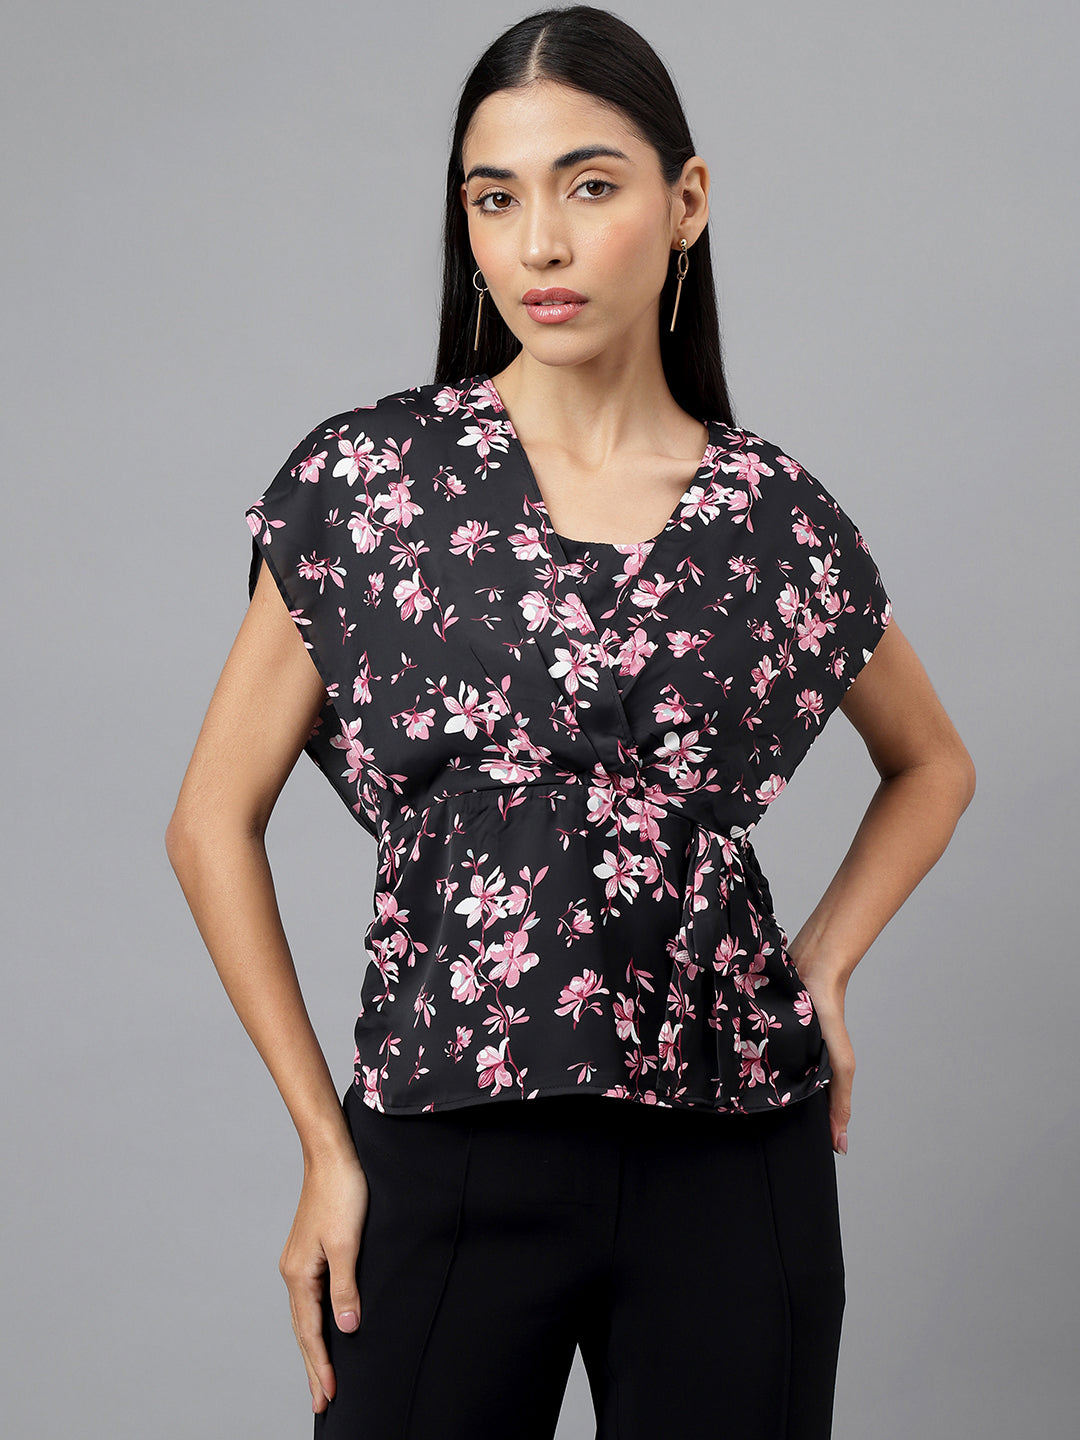 Black Cap Sleeve V-Neck Floral Print Blouse Top